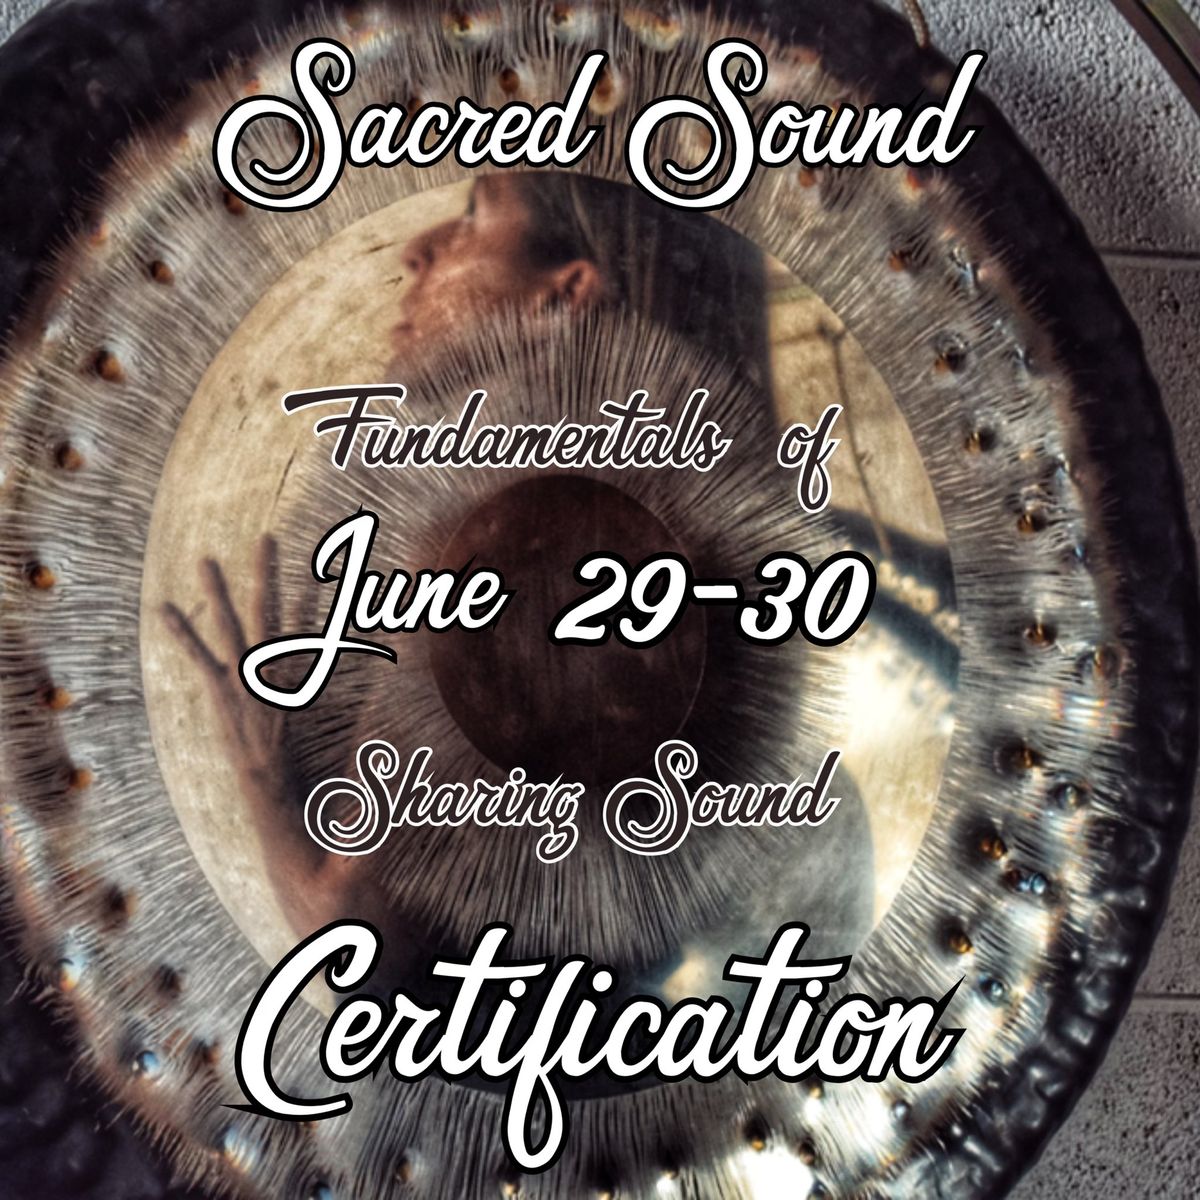 Sacred Sound Certification Training